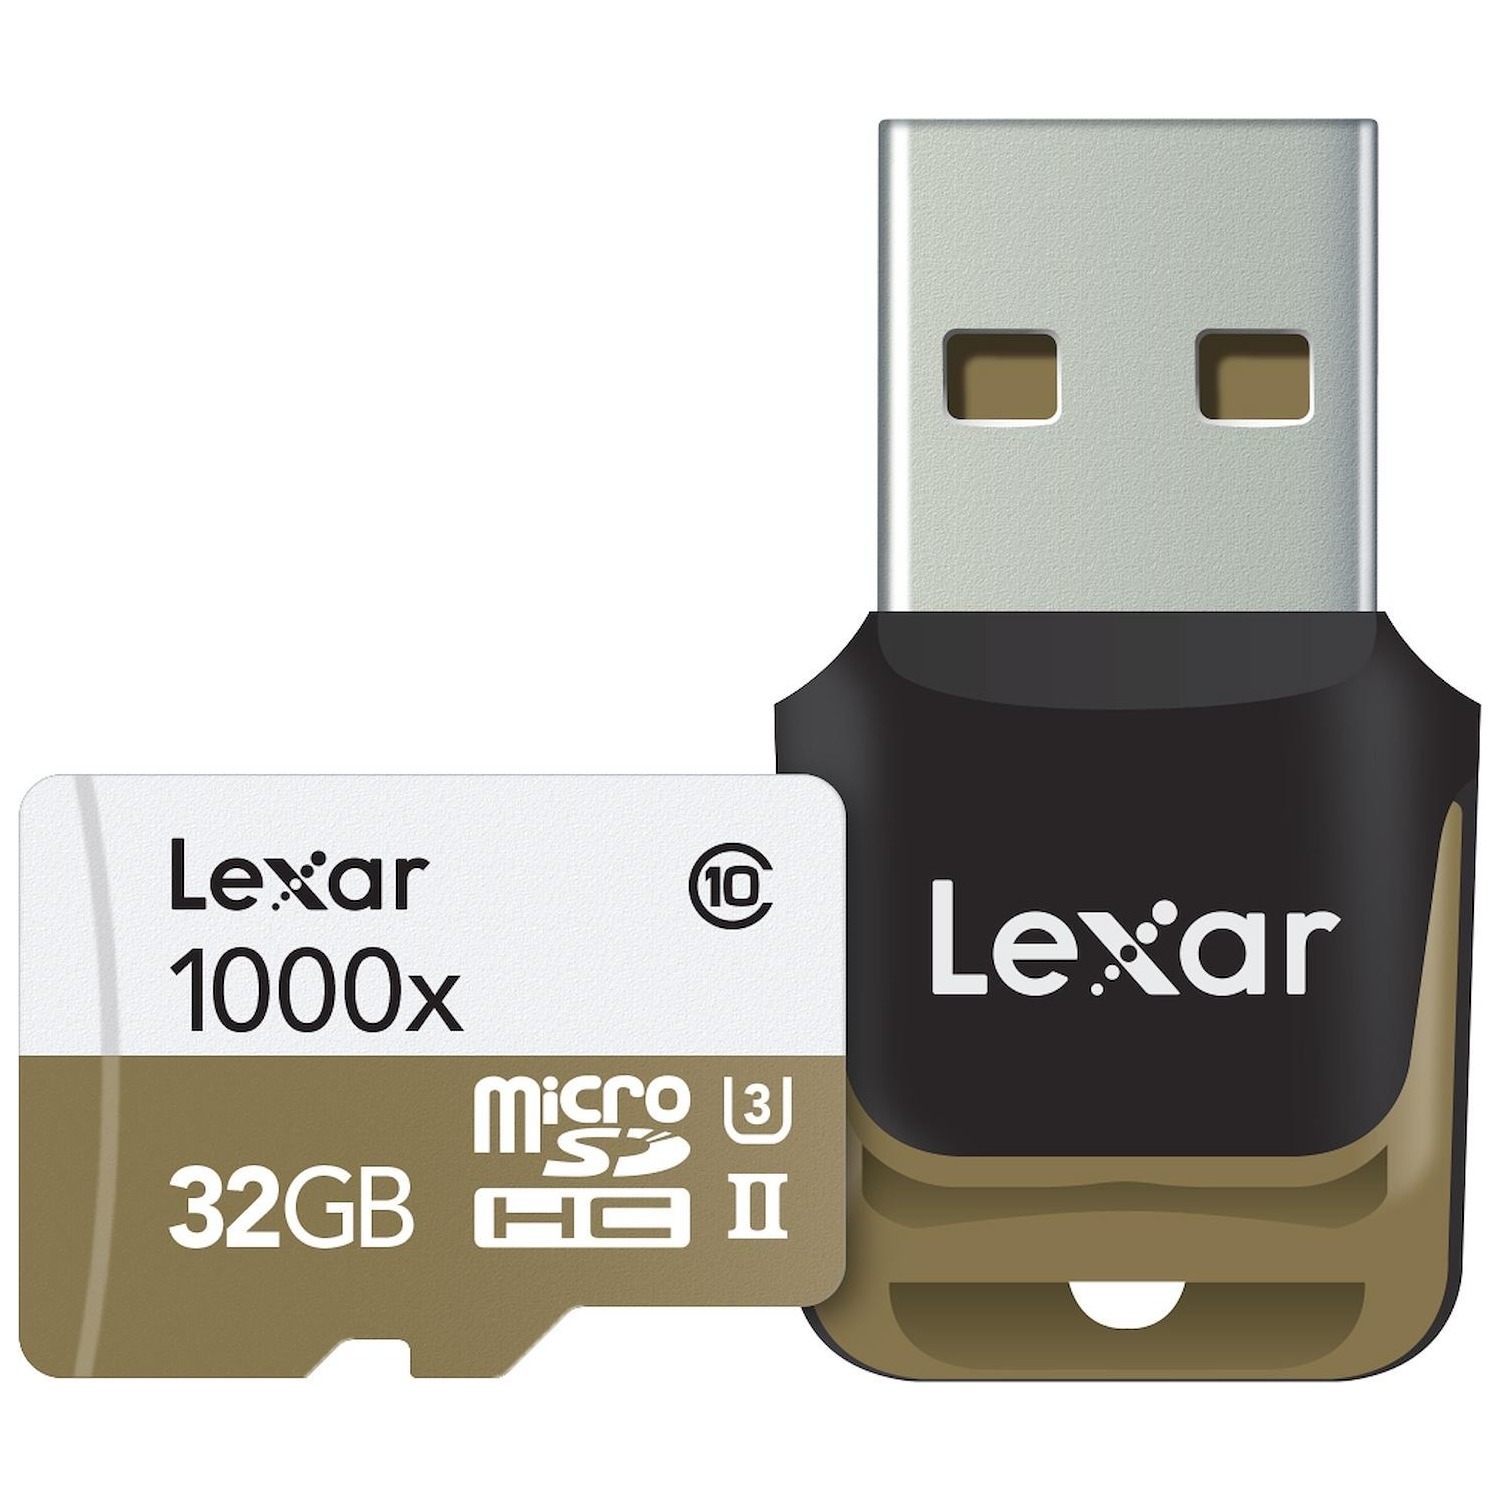 Immagine per MicroSD Lexar 32GB 1000X CL.10 da DIMOStore